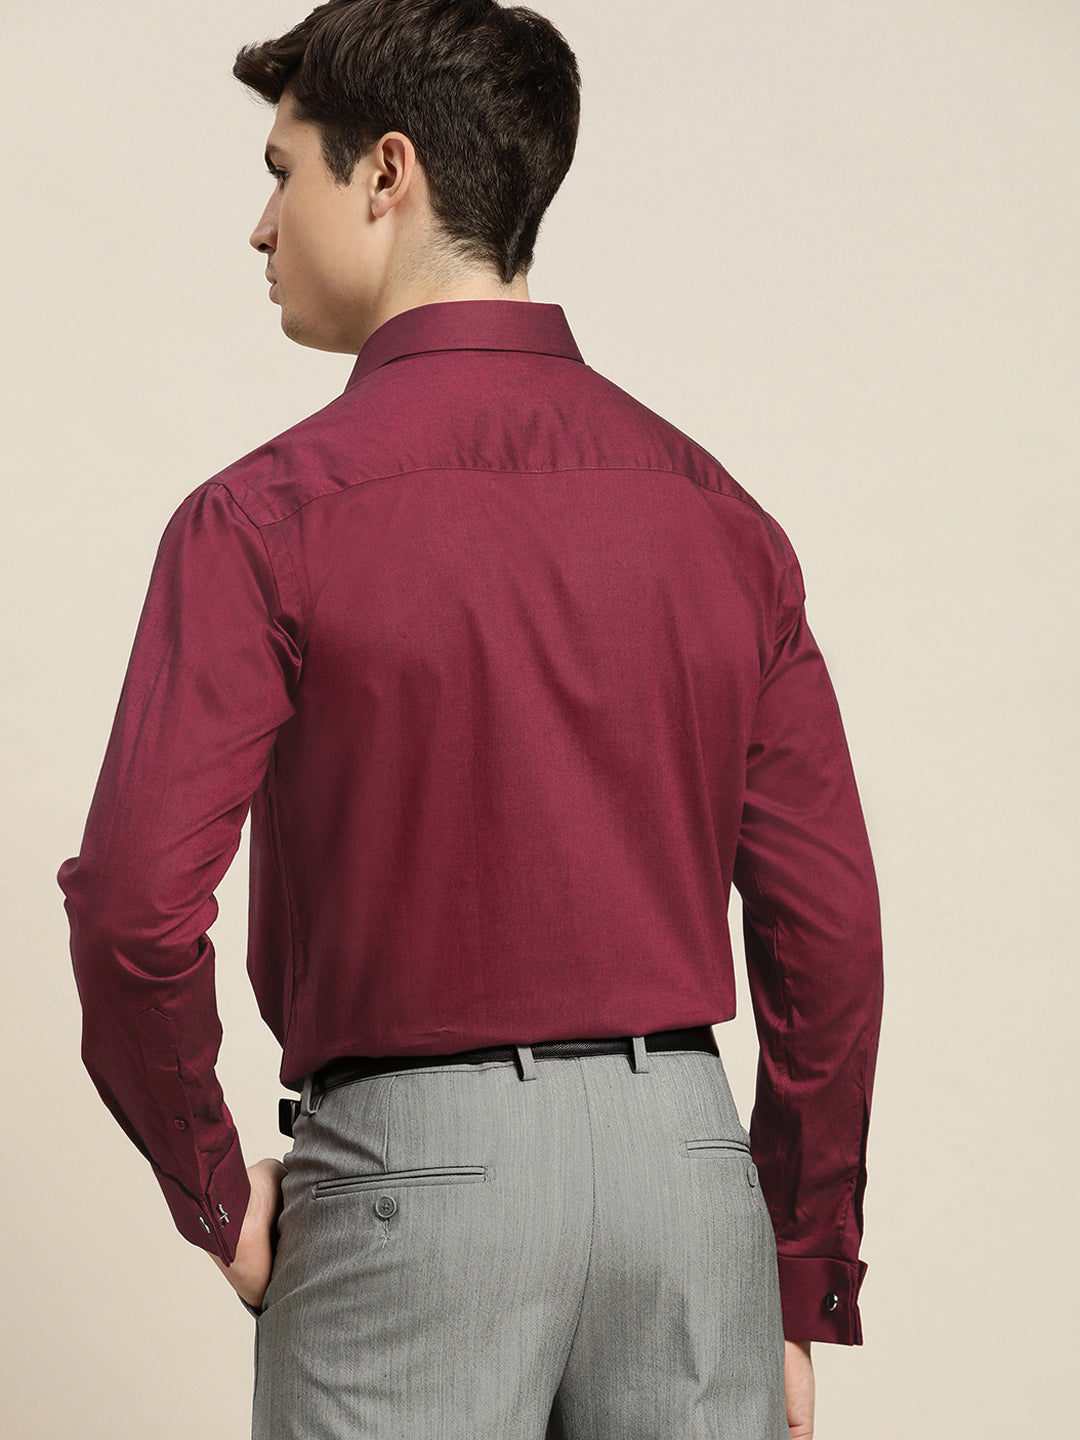 Wrinkle Free Point Collar Dress Shirt - Men's Dress Shirts | JoS. A. Bank